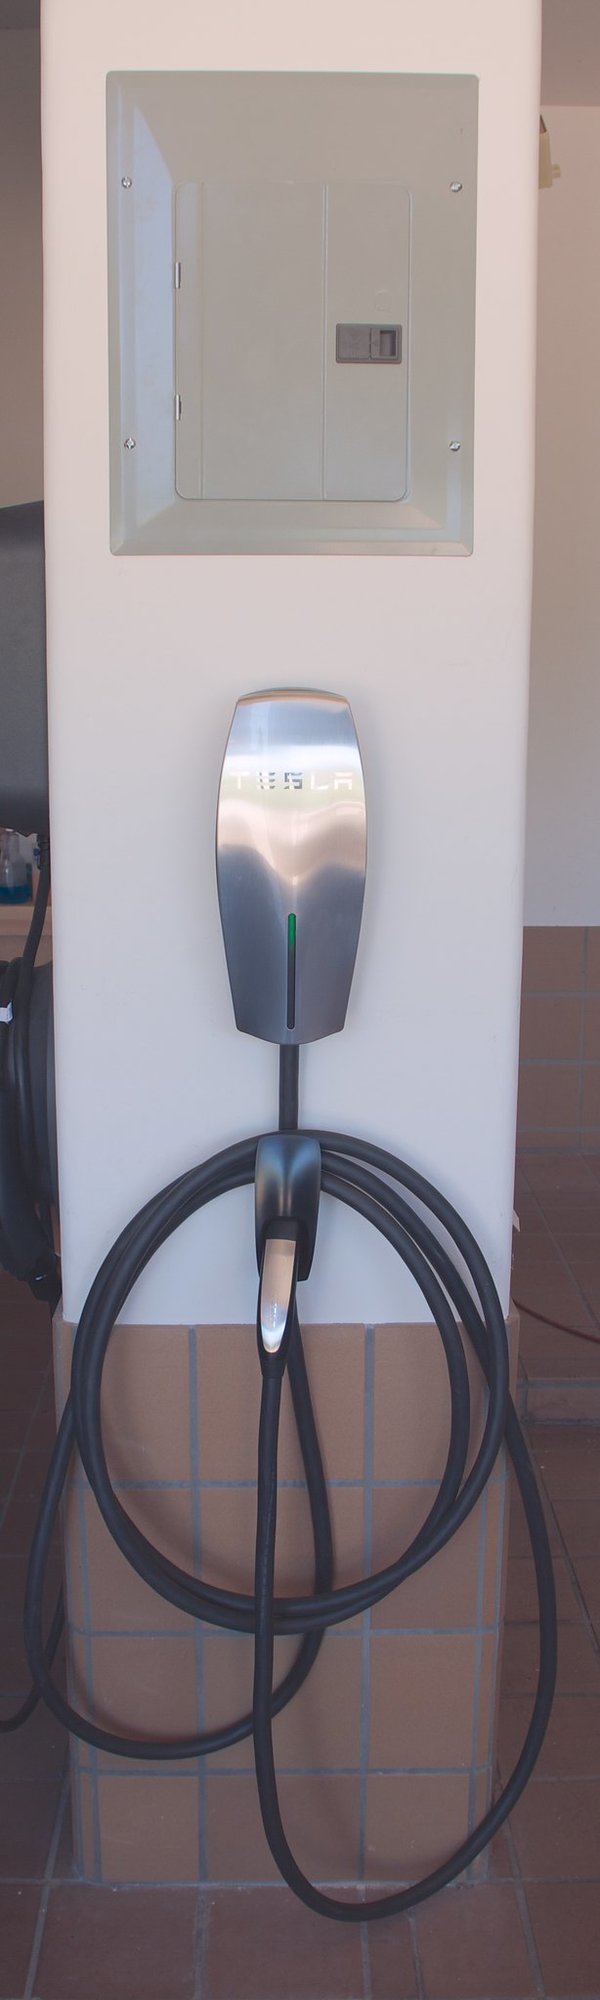 Charging equipment fault on the Tesla destination charger | Tesla Motors  Club